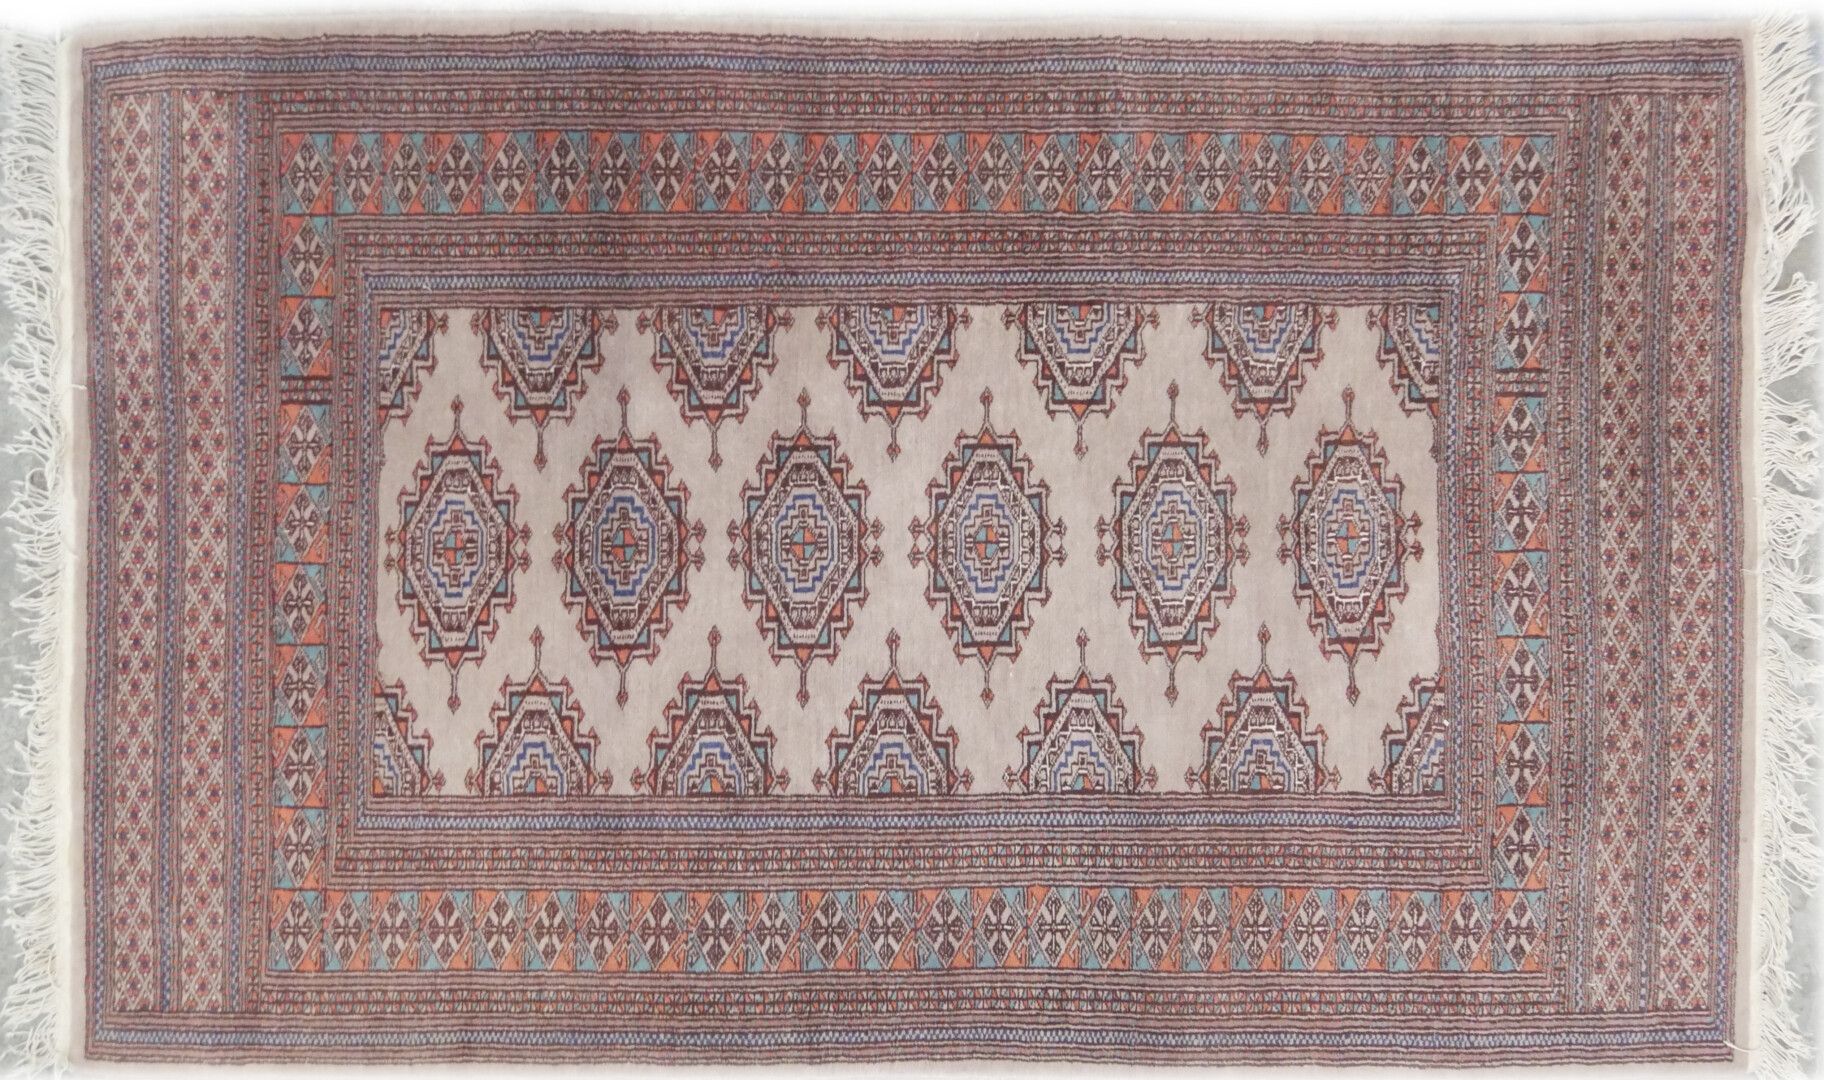 Null 现代工作

东方羊毛地毯，灰褐色背景上有几何图案，有宽边。

尺寸：168 x 97 cm. 63 x 38,2 in.

污渍，边缘磨损，使用状态